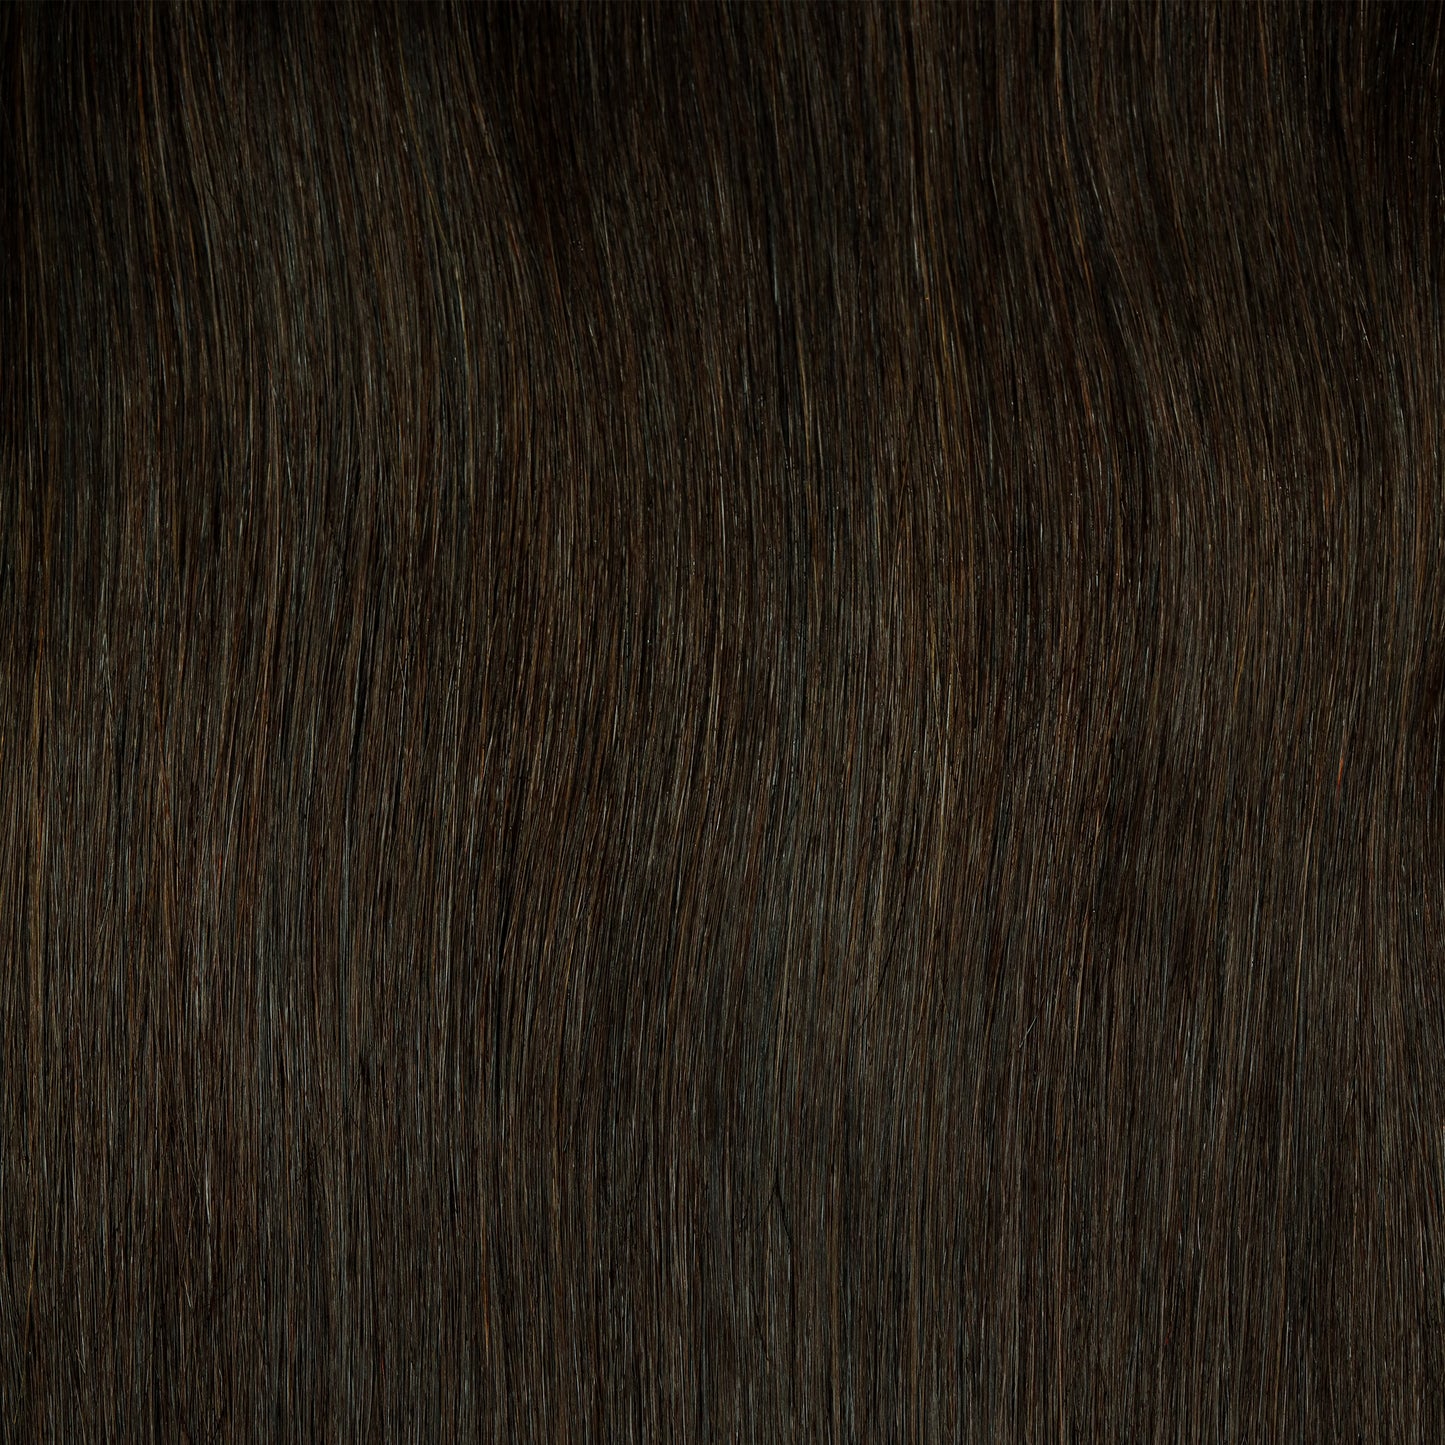 16" Clip-In Dark Brown Hair Extension